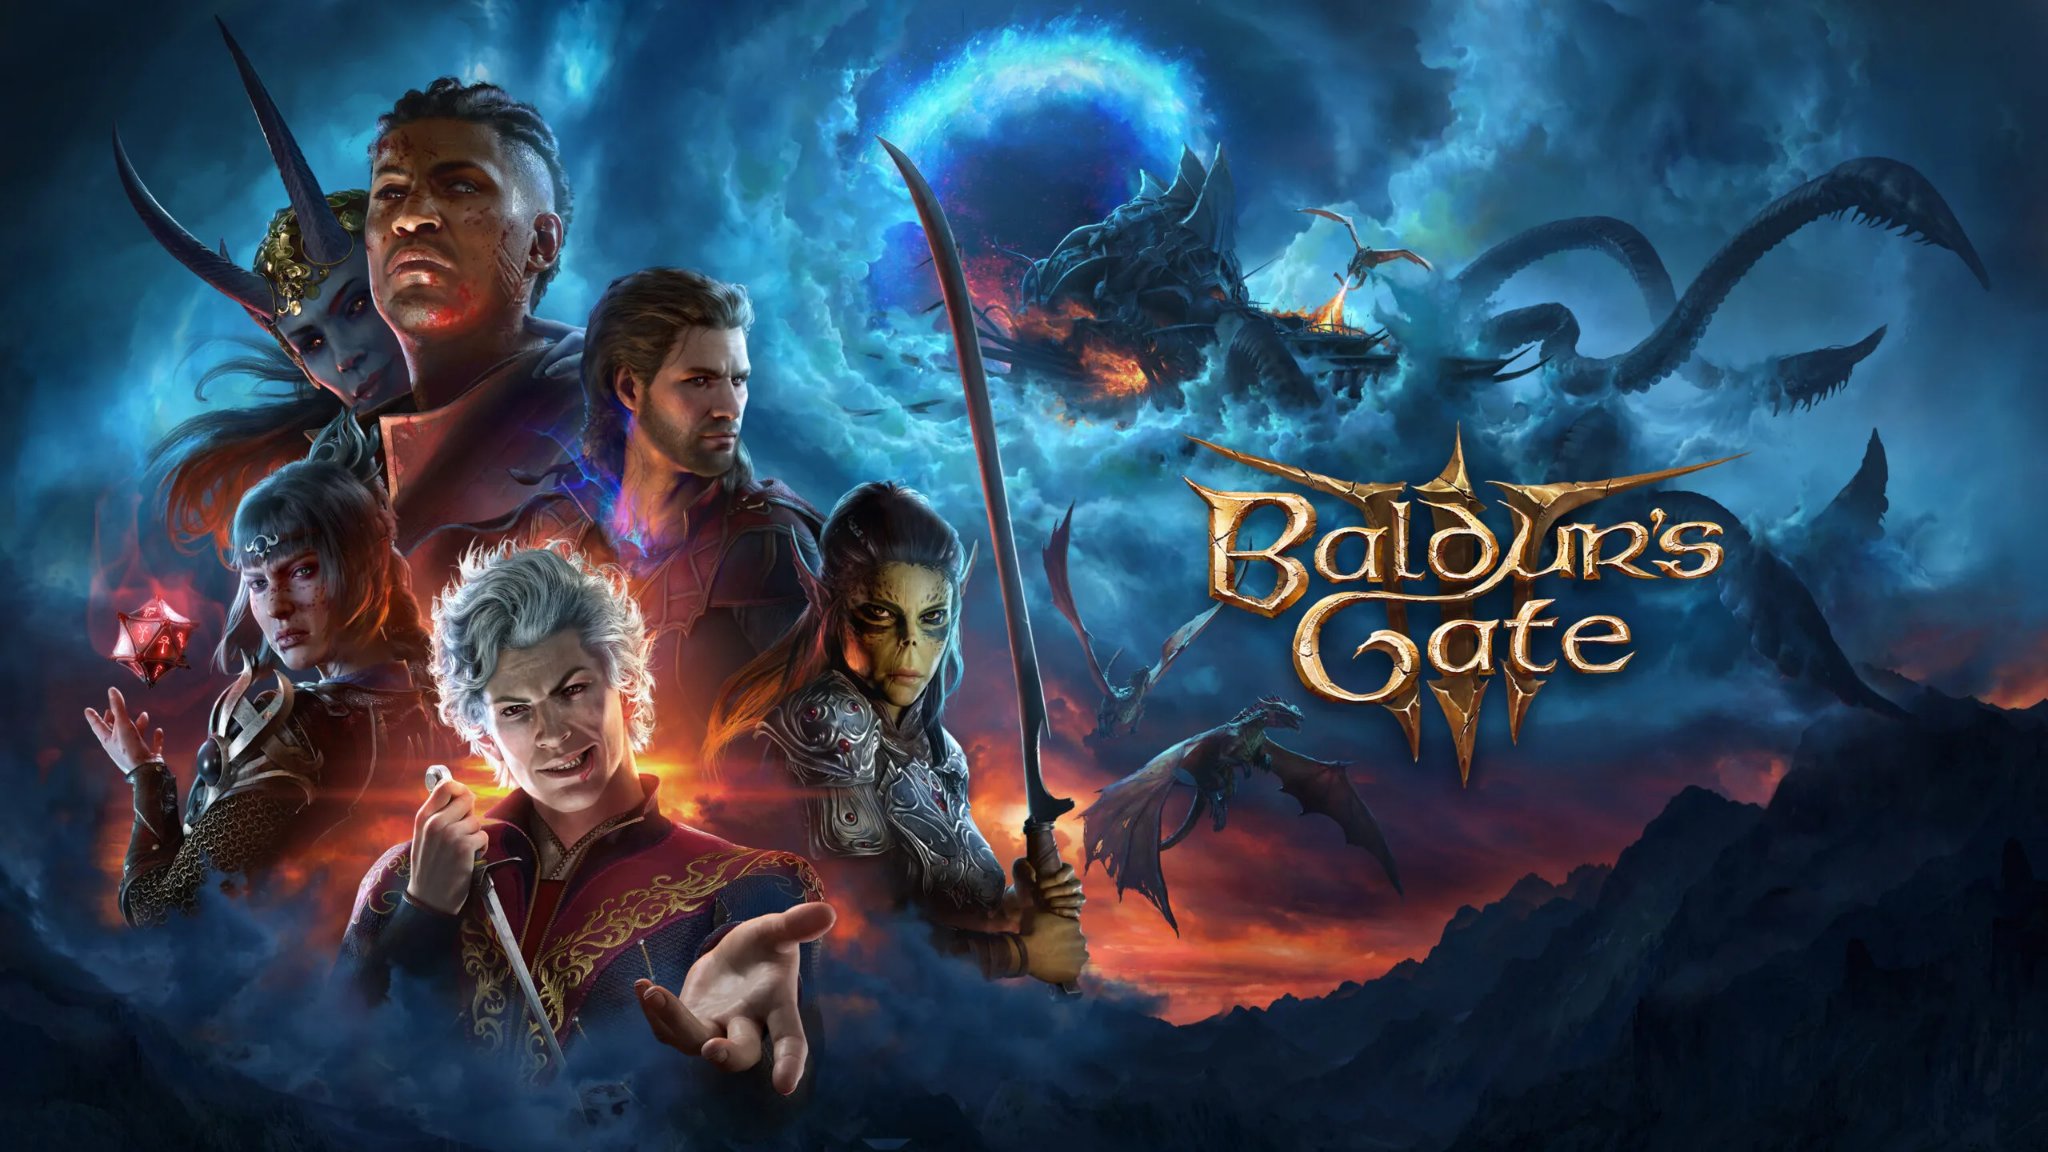 Baldur’s Gate 3 arribarà enguany a Xbox Series